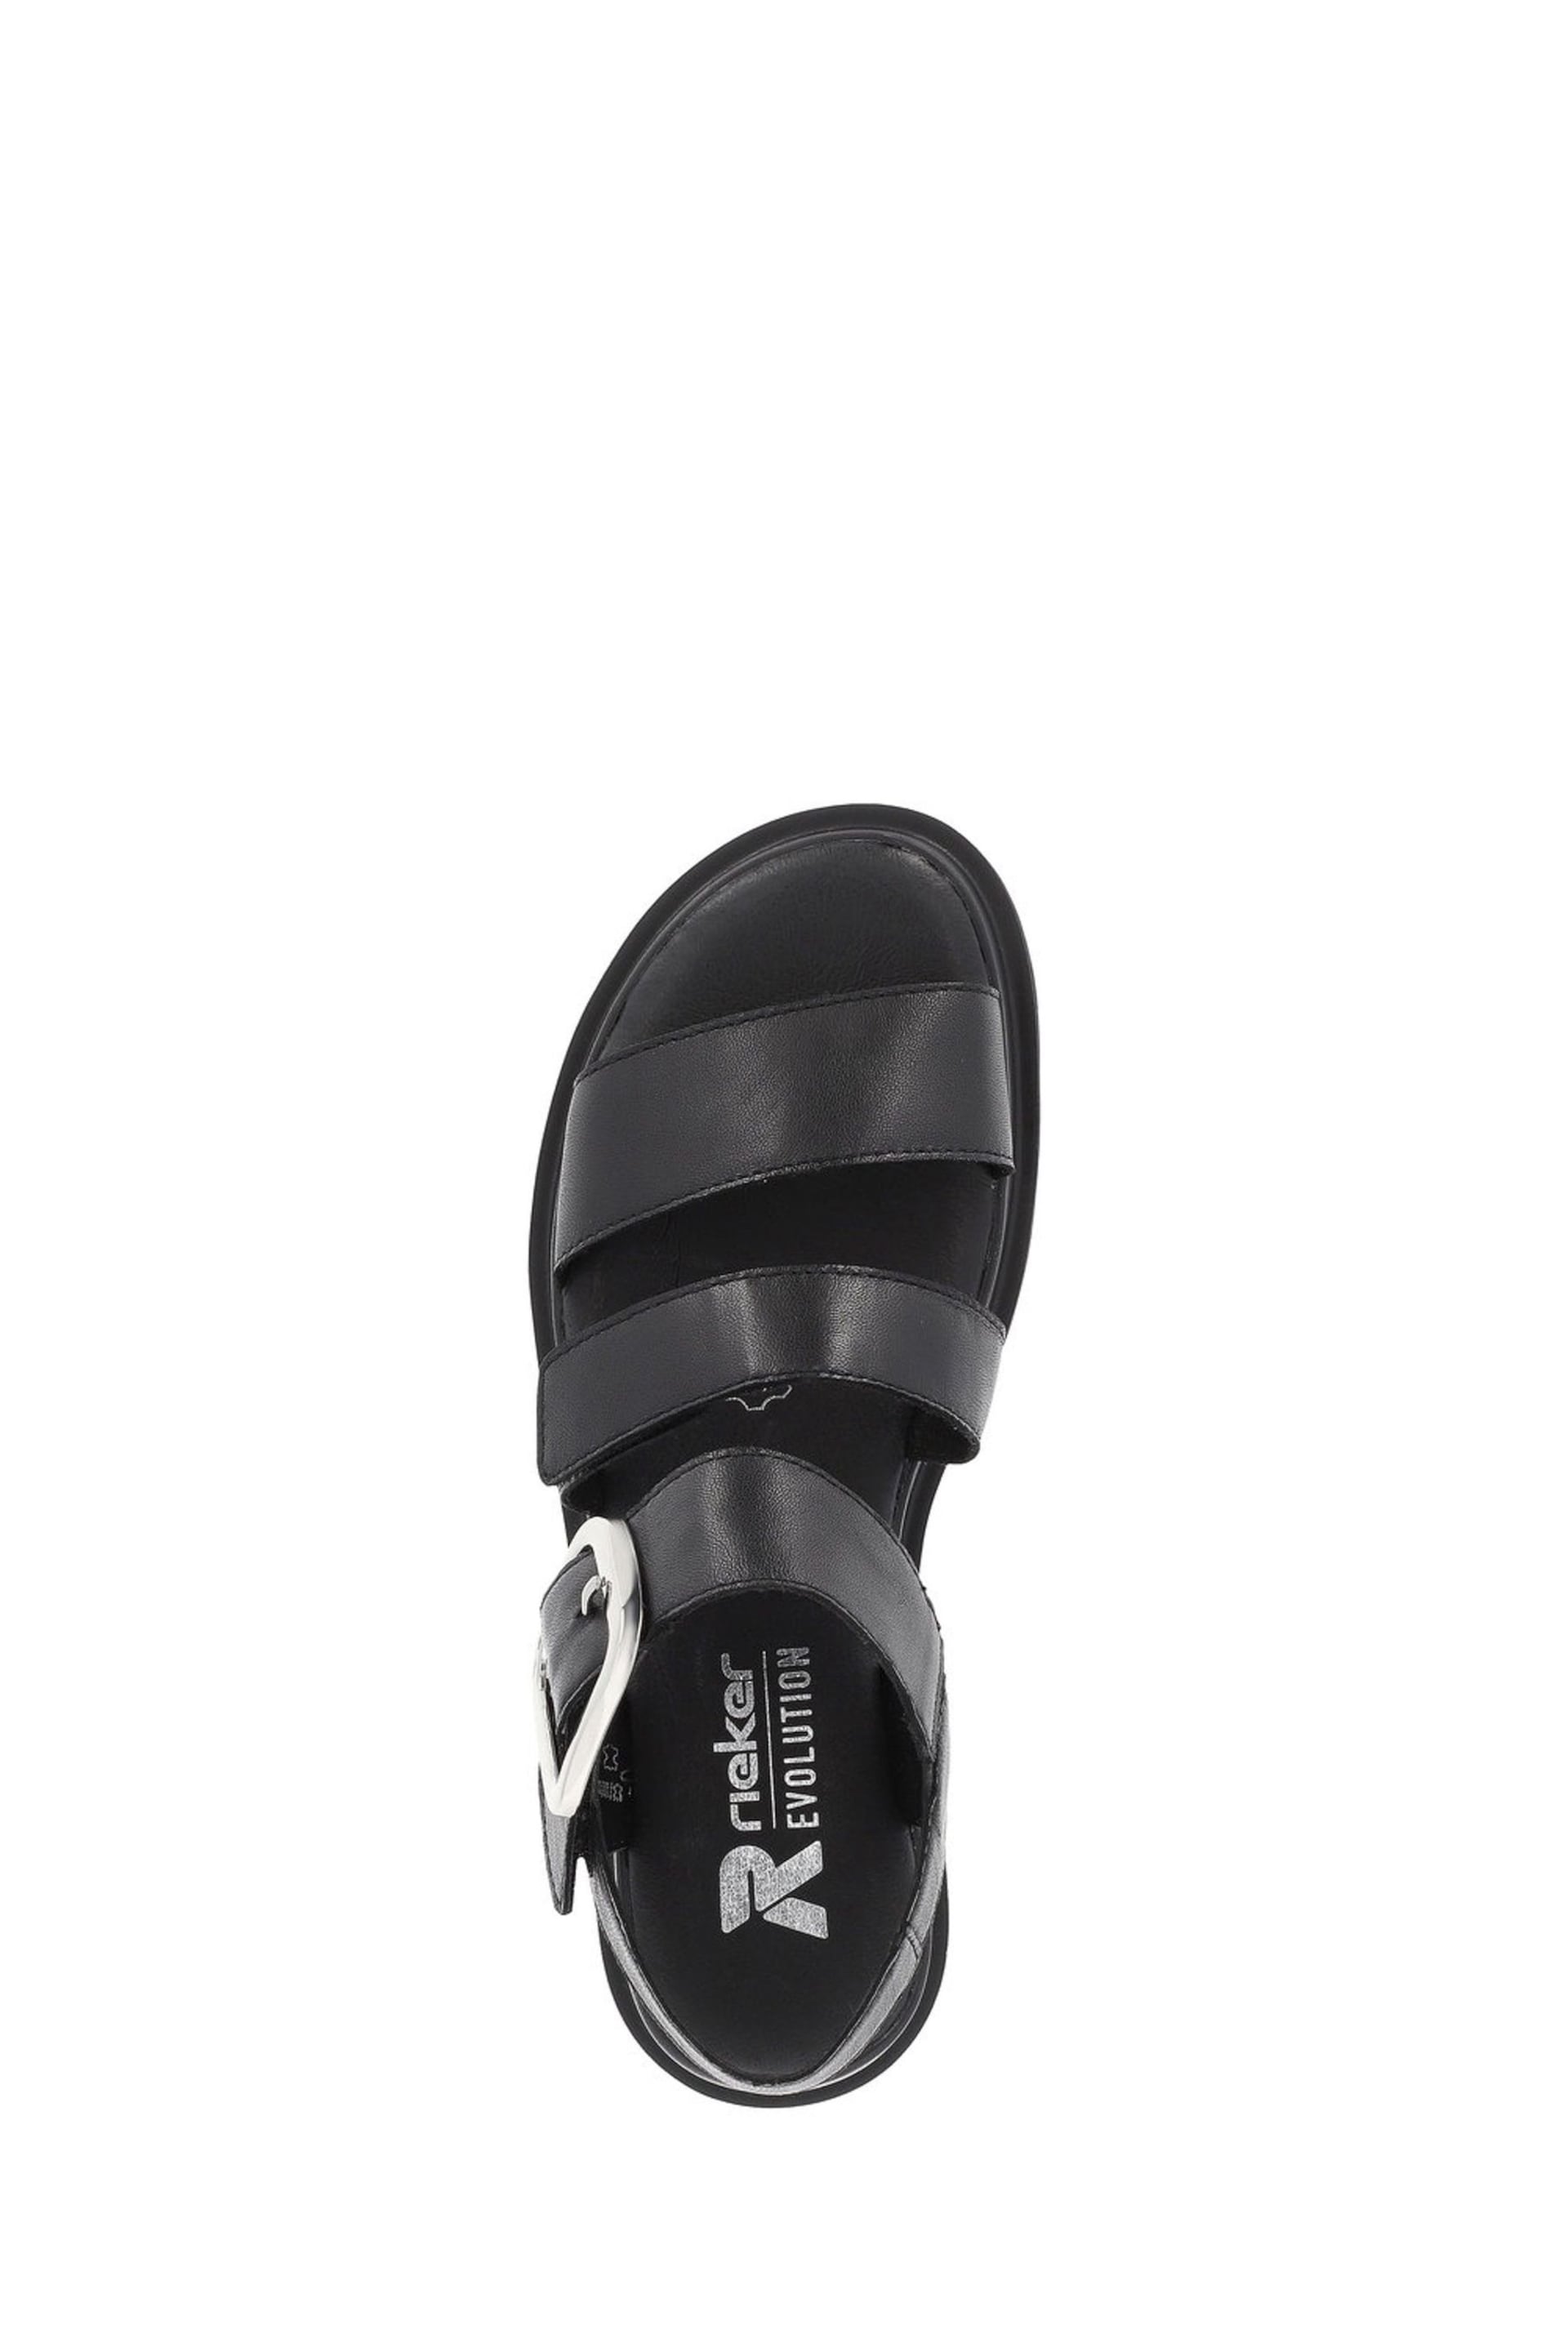 Rieker Womens Evolution Bur Fastener Sandals - Image 4 of 10